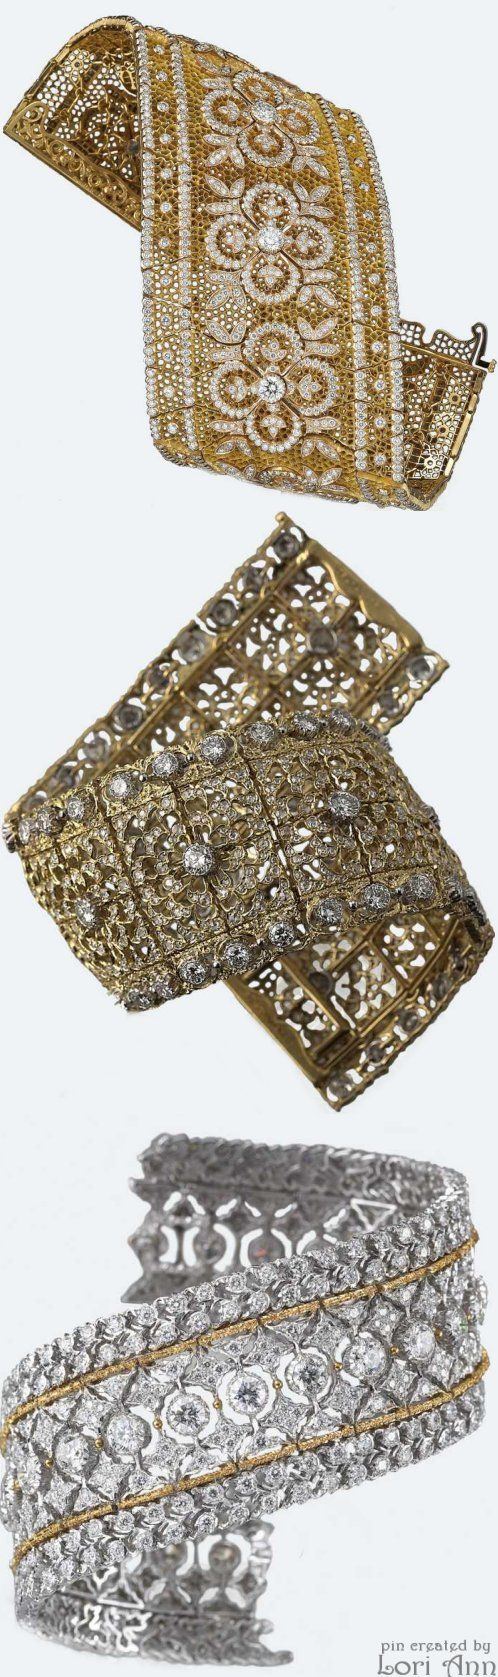 Buccellati High Jewelry Collection Bracelets...